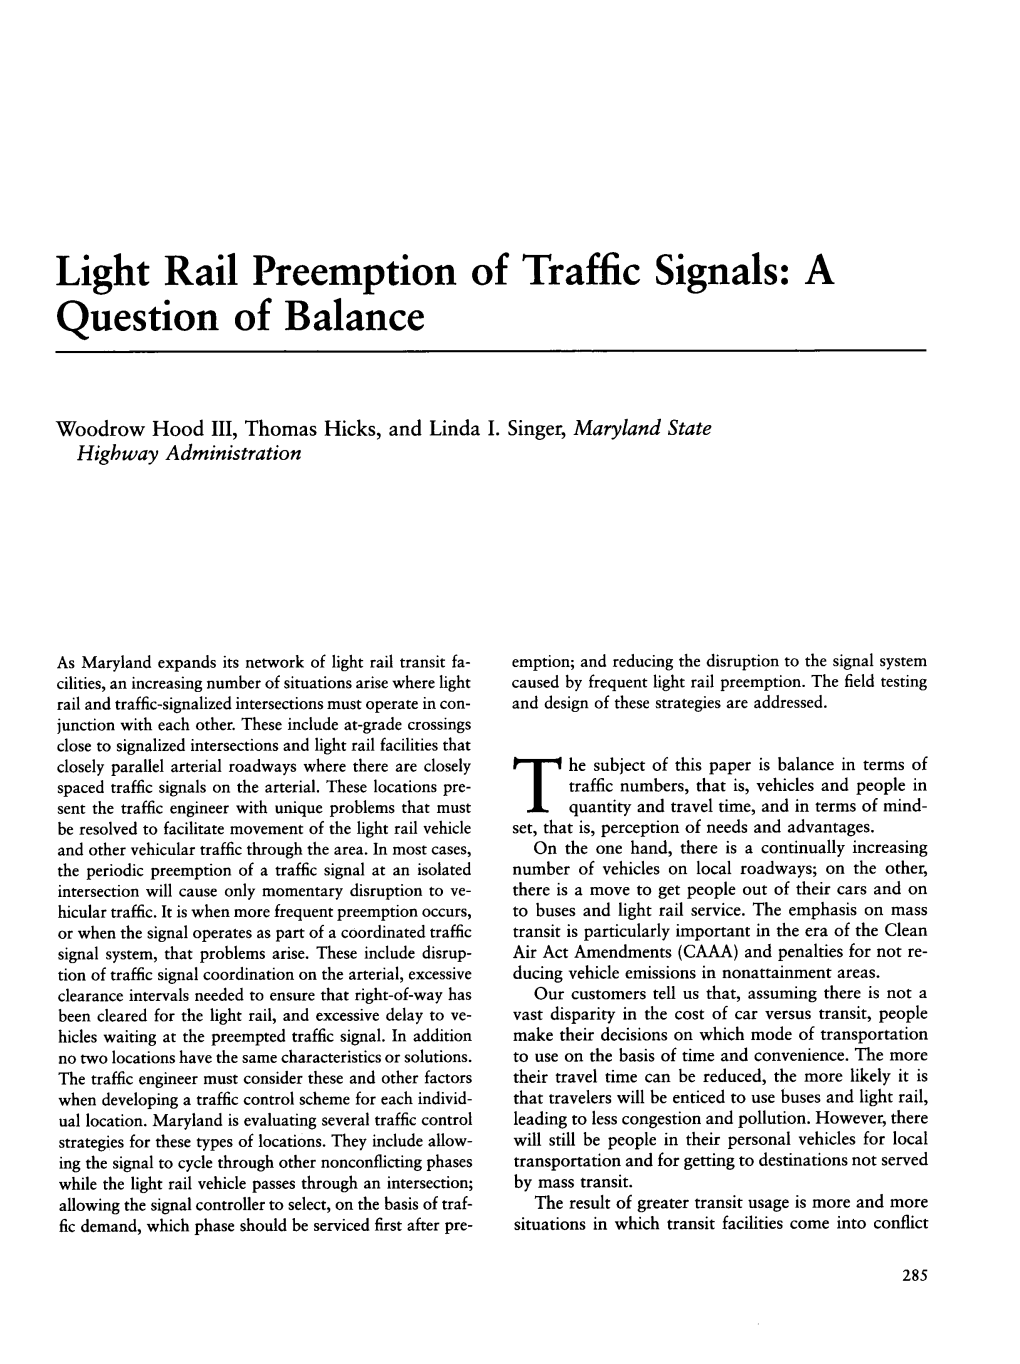 Light Rail Preemption of Traffic Signals: a Question of Balance